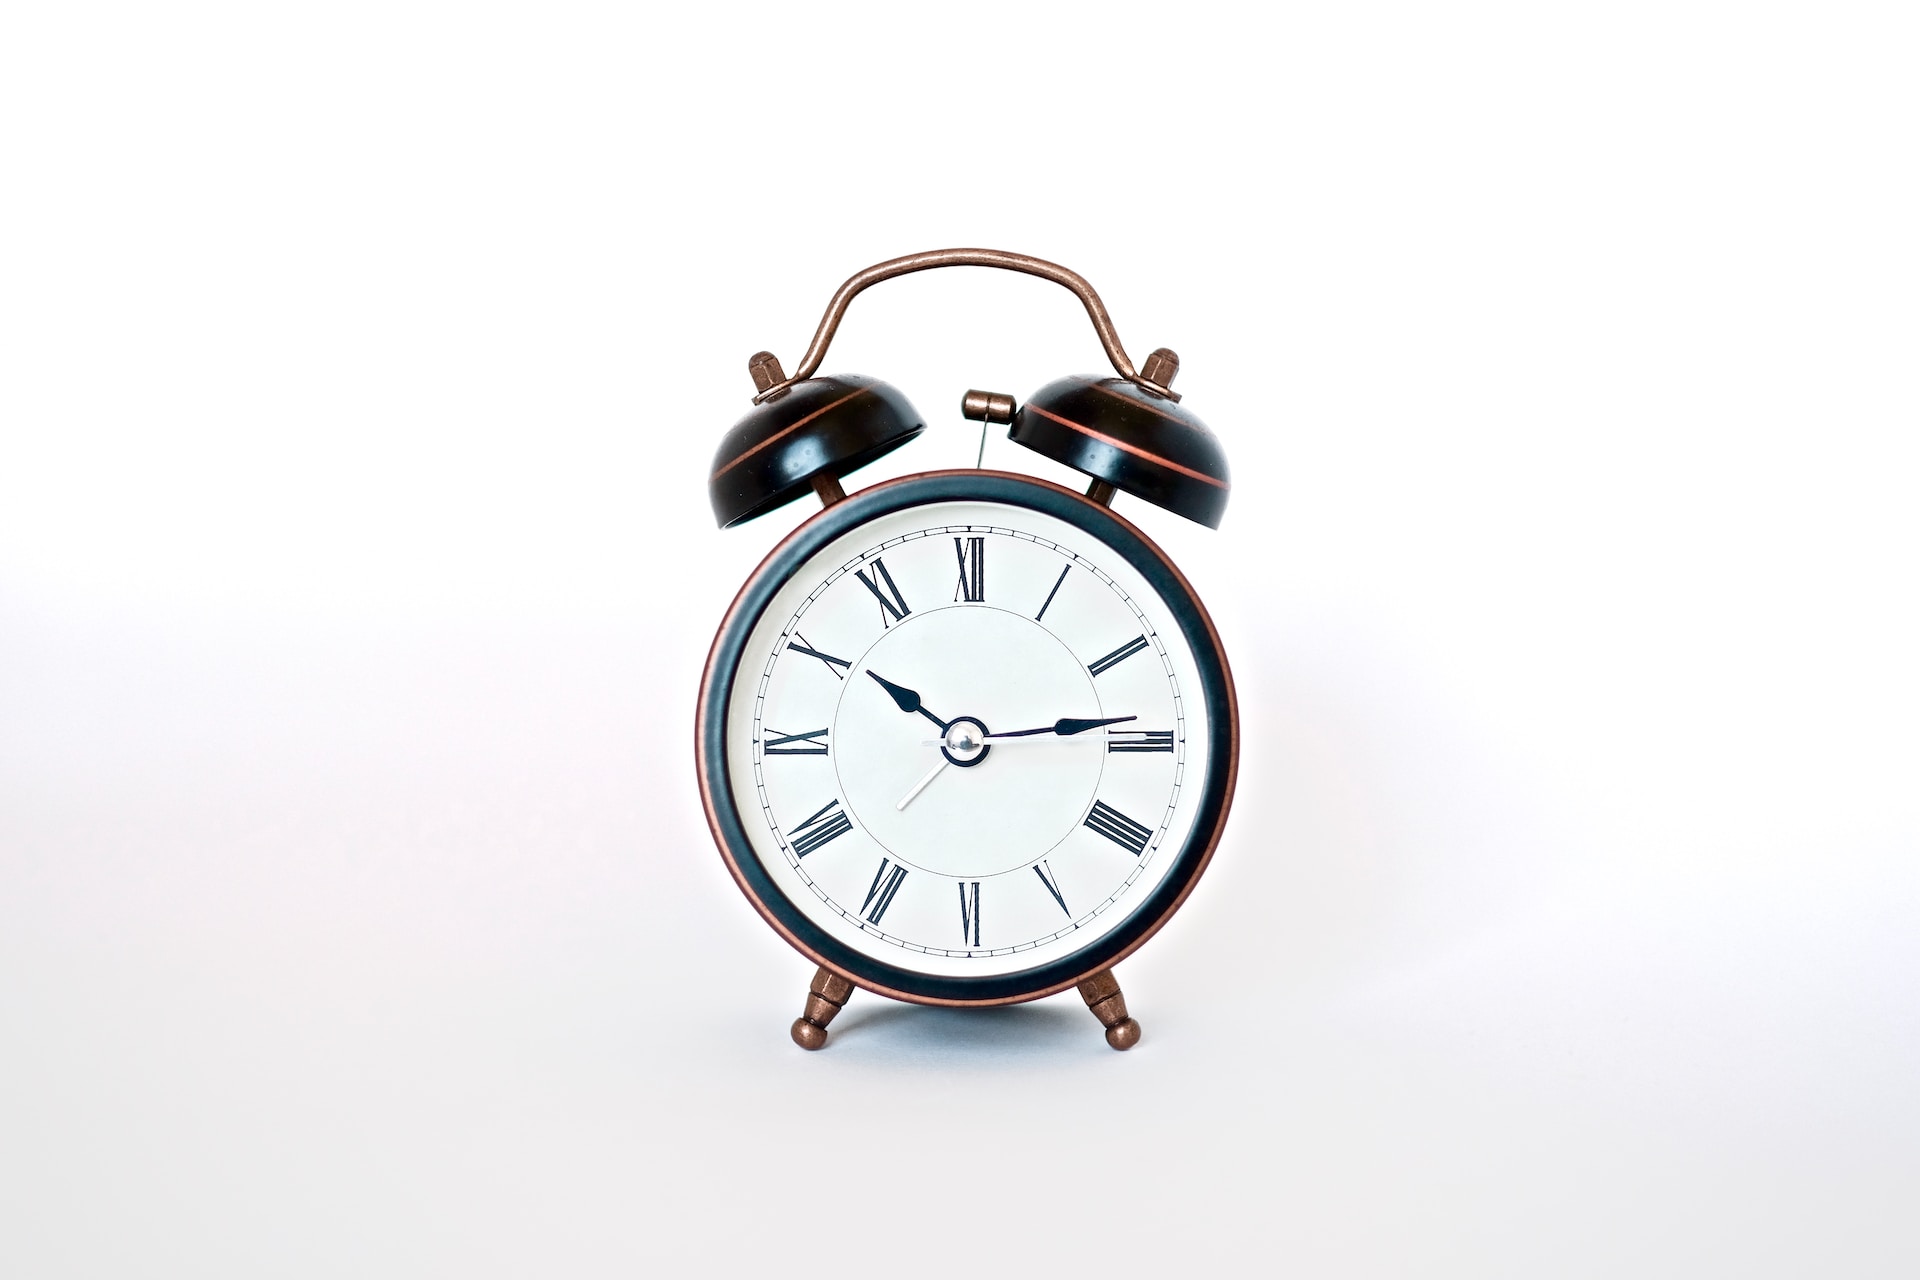 An alarm clock showing 10:15